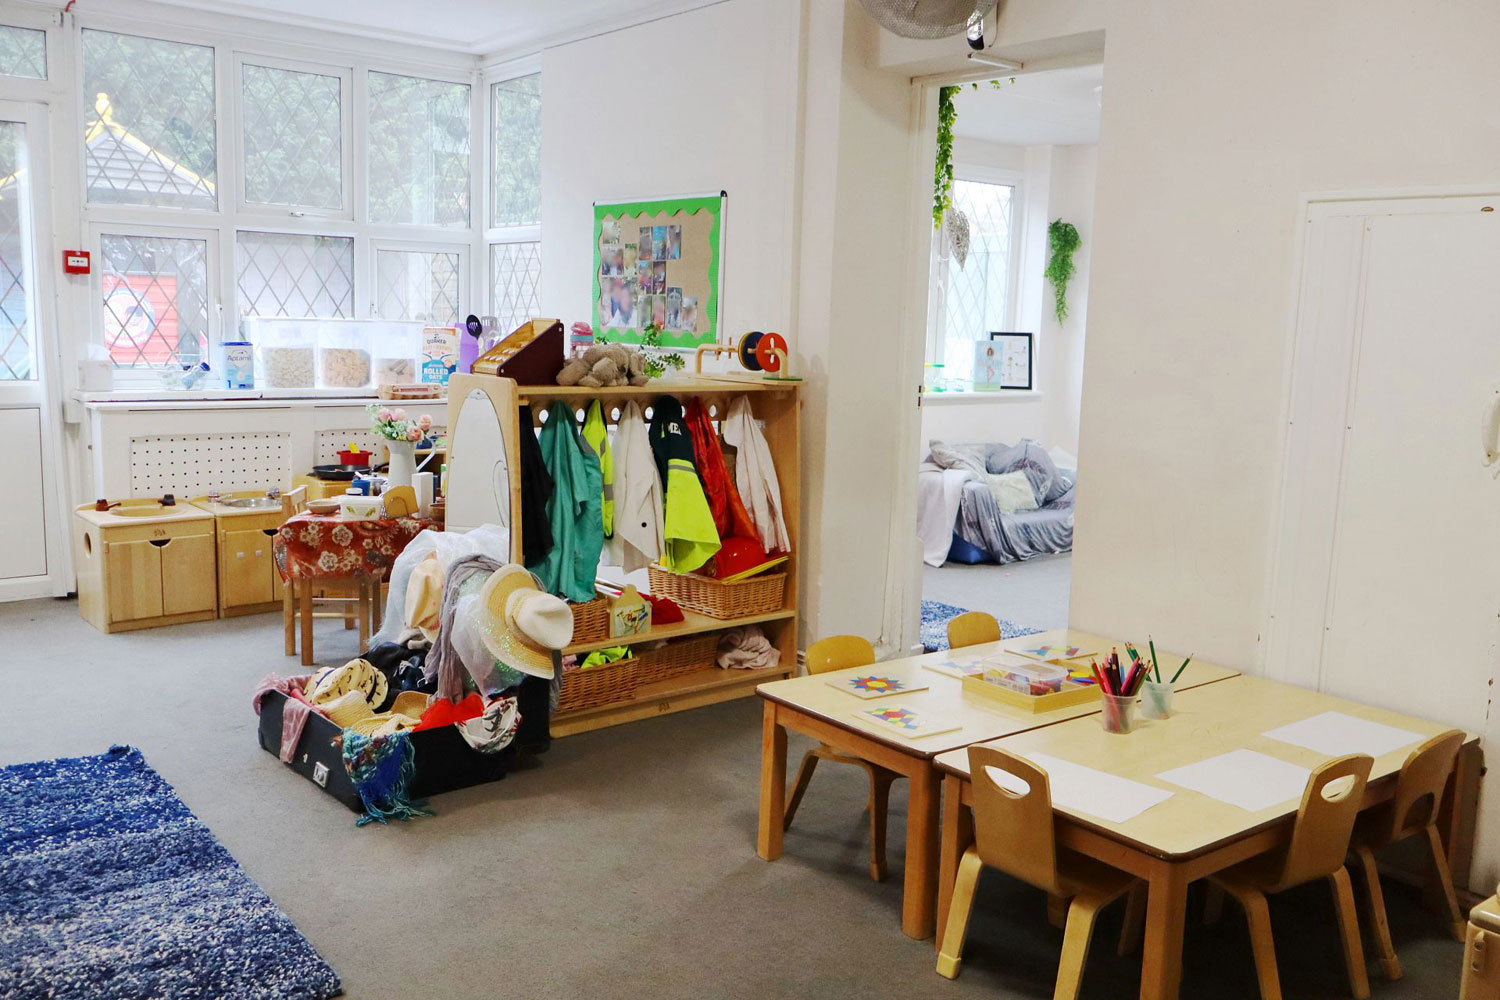 Tudor House Day Nursery and Preschool preschool